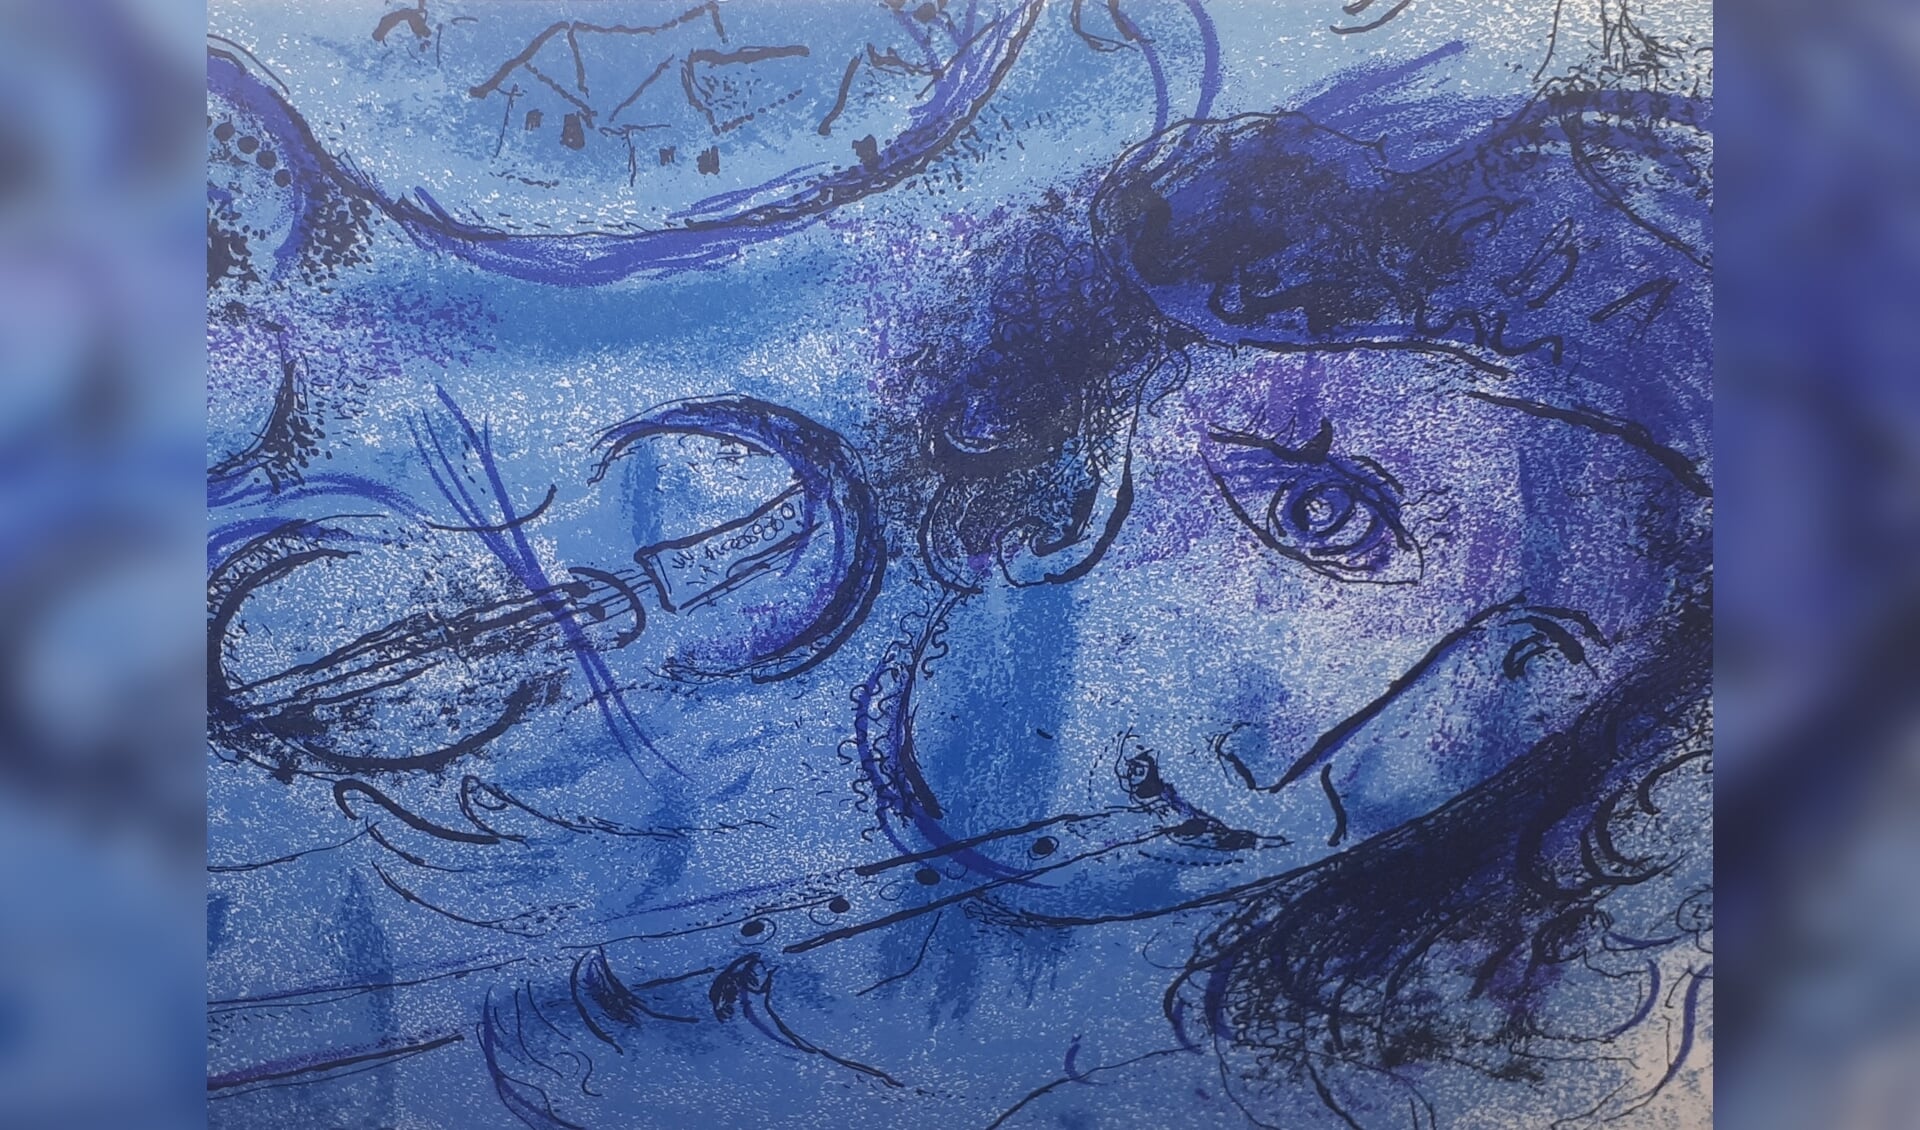 De blauwe engel van Chagall. (foto: Charlotte Selten)